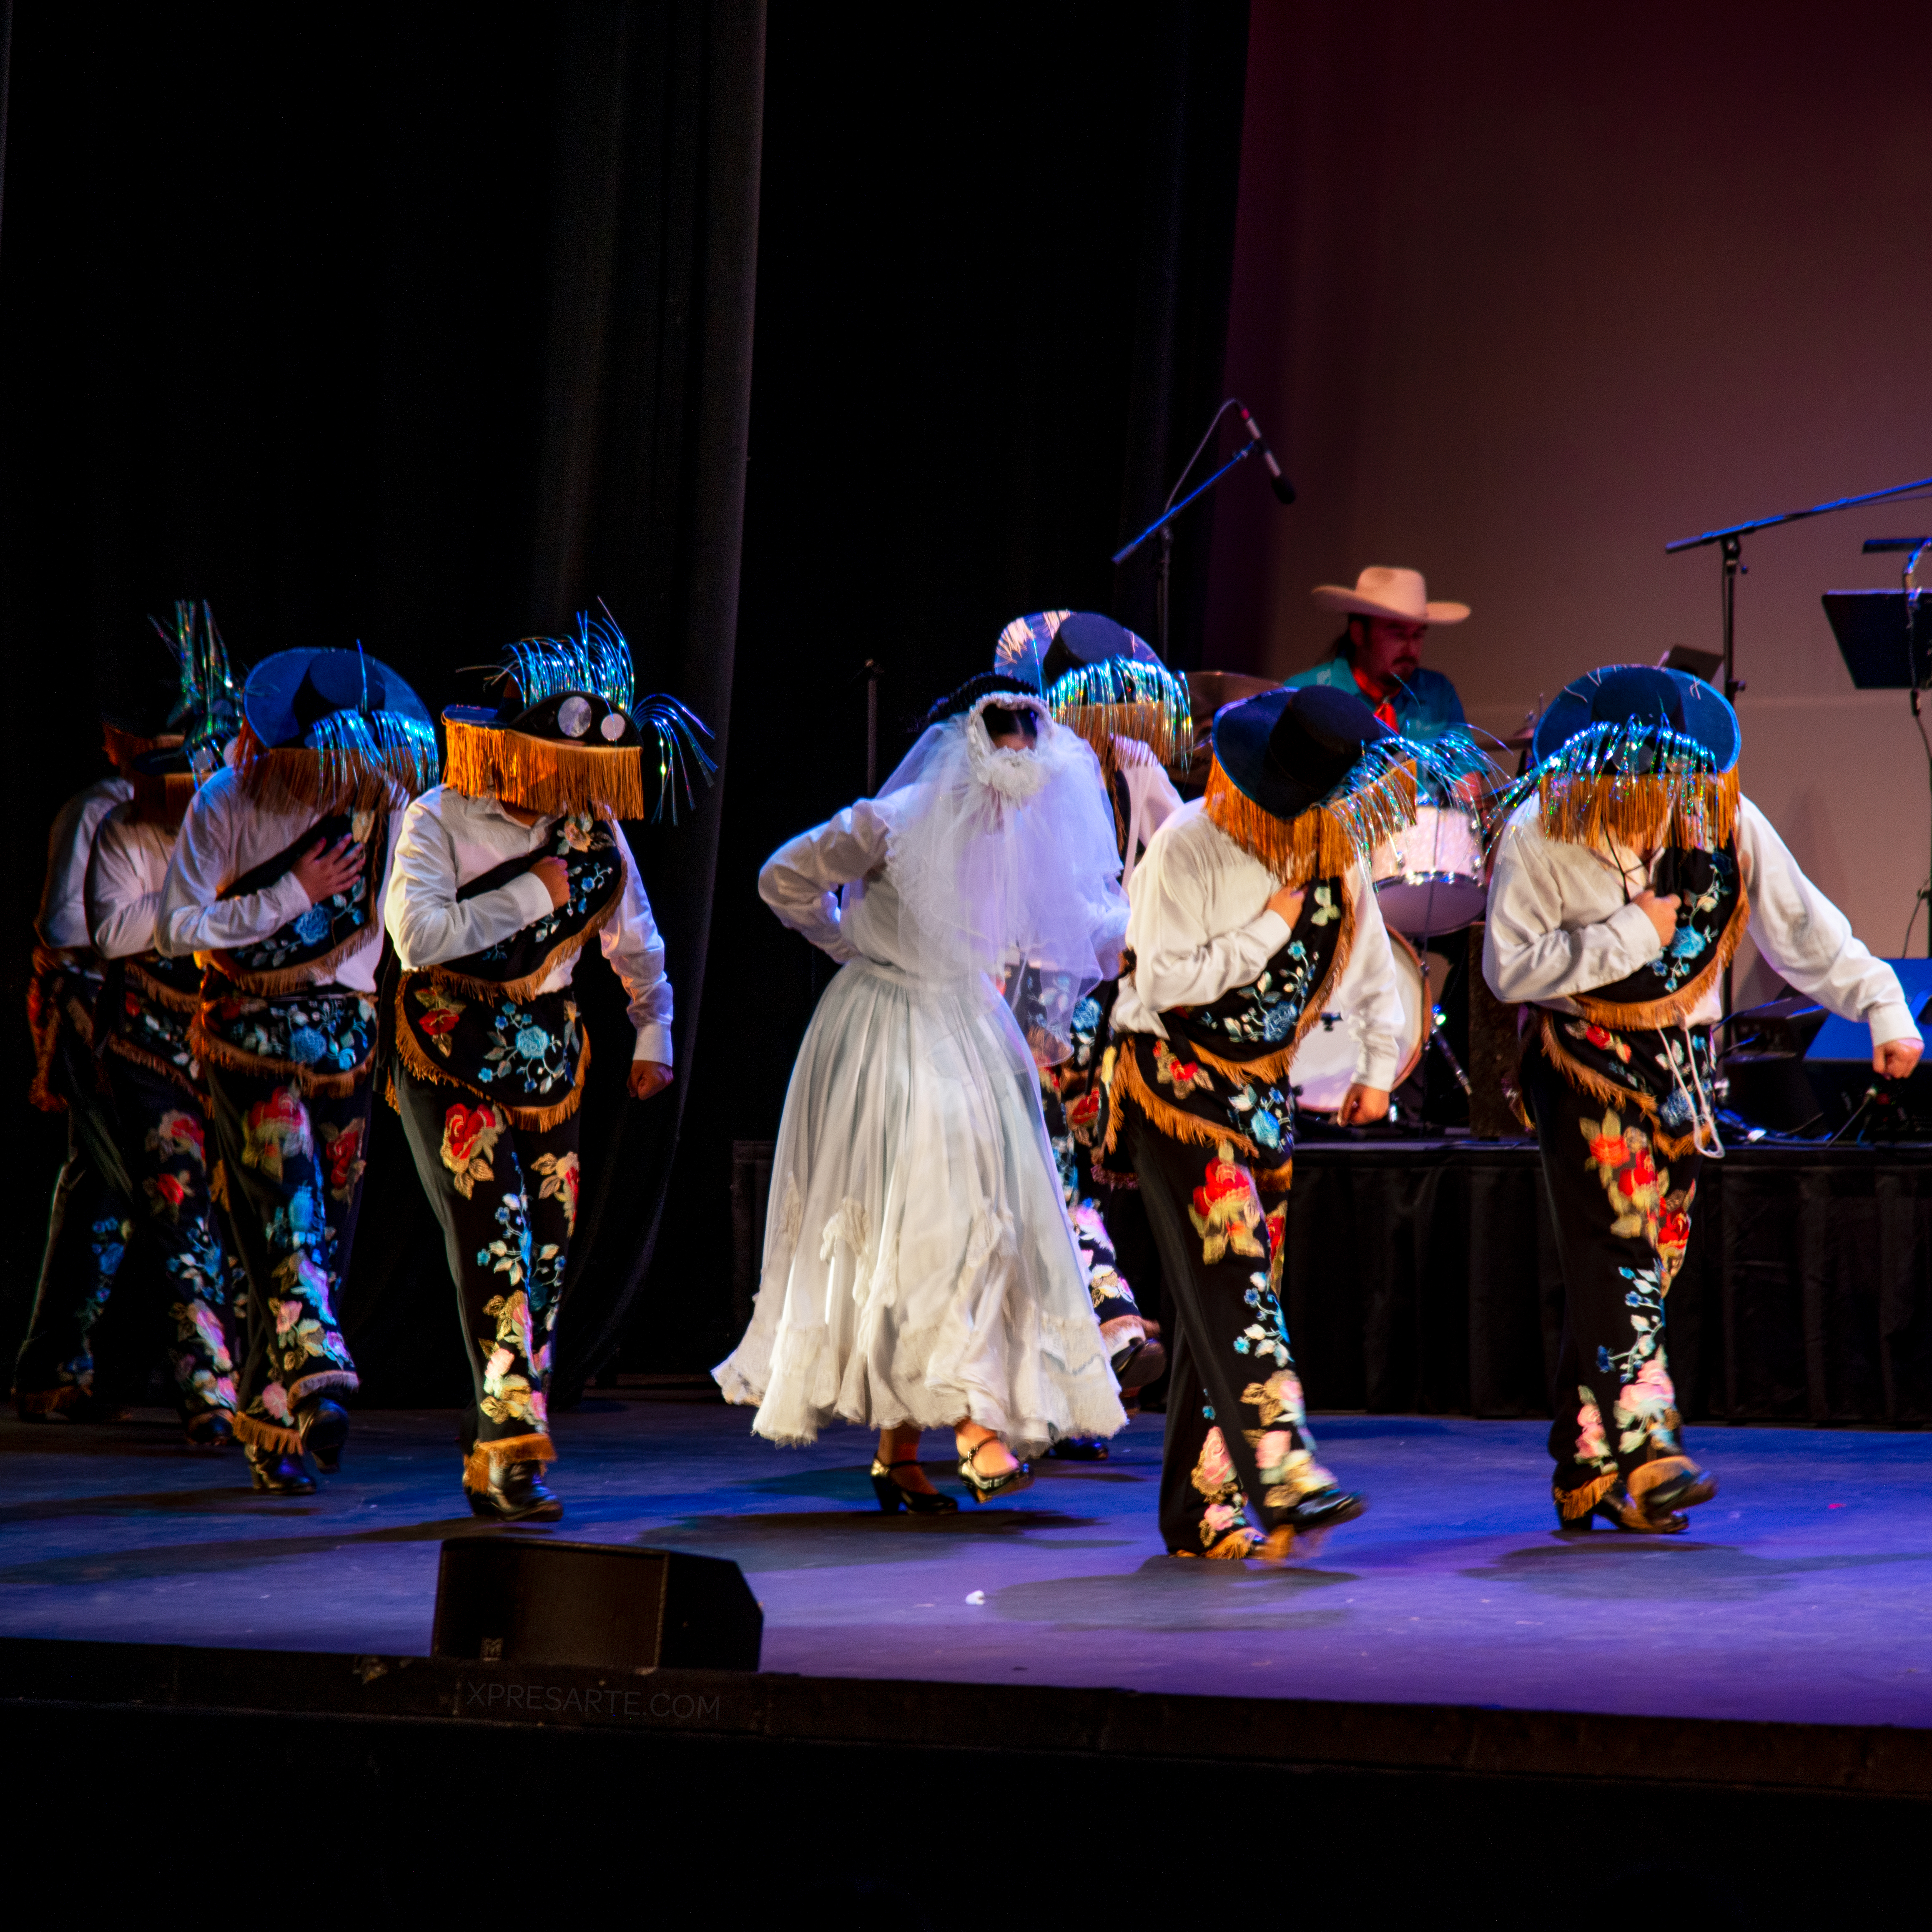 The Mexican Dance Company performing Los Negritos